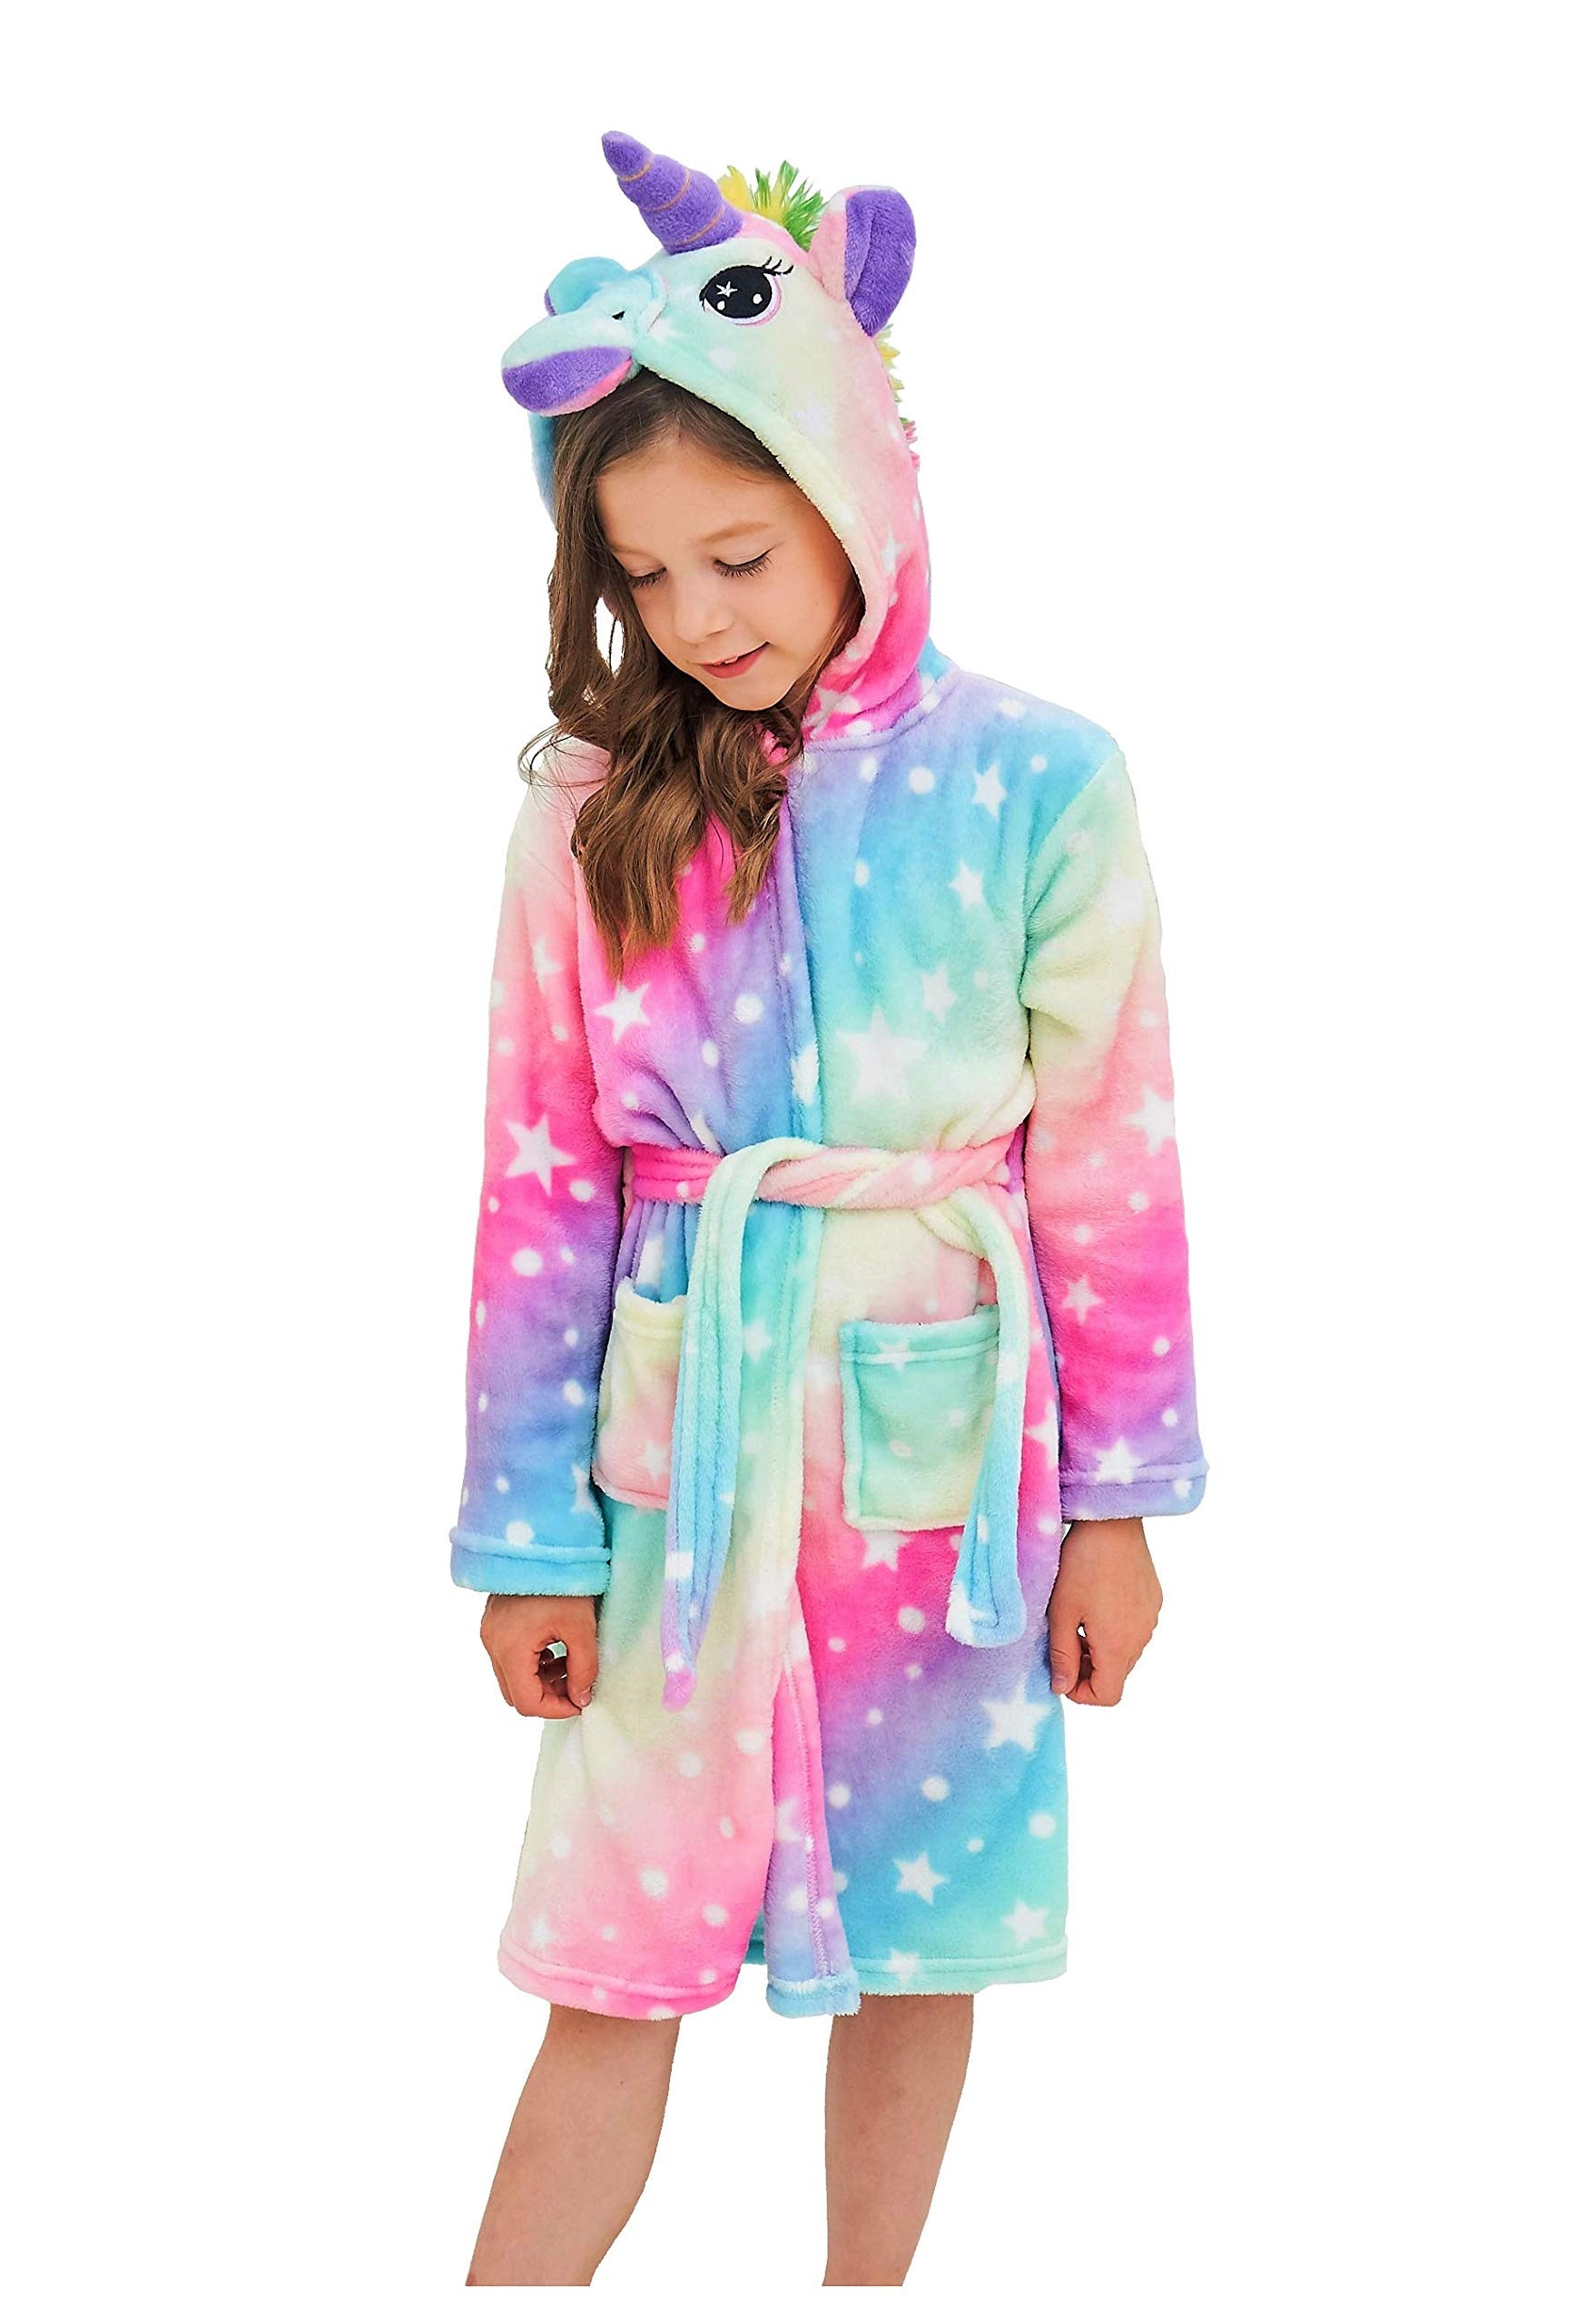 Unicorn Gifts for Girls Ksnnrsng Kids Soft Unicorn Hooded Bathrobe Sleepwear